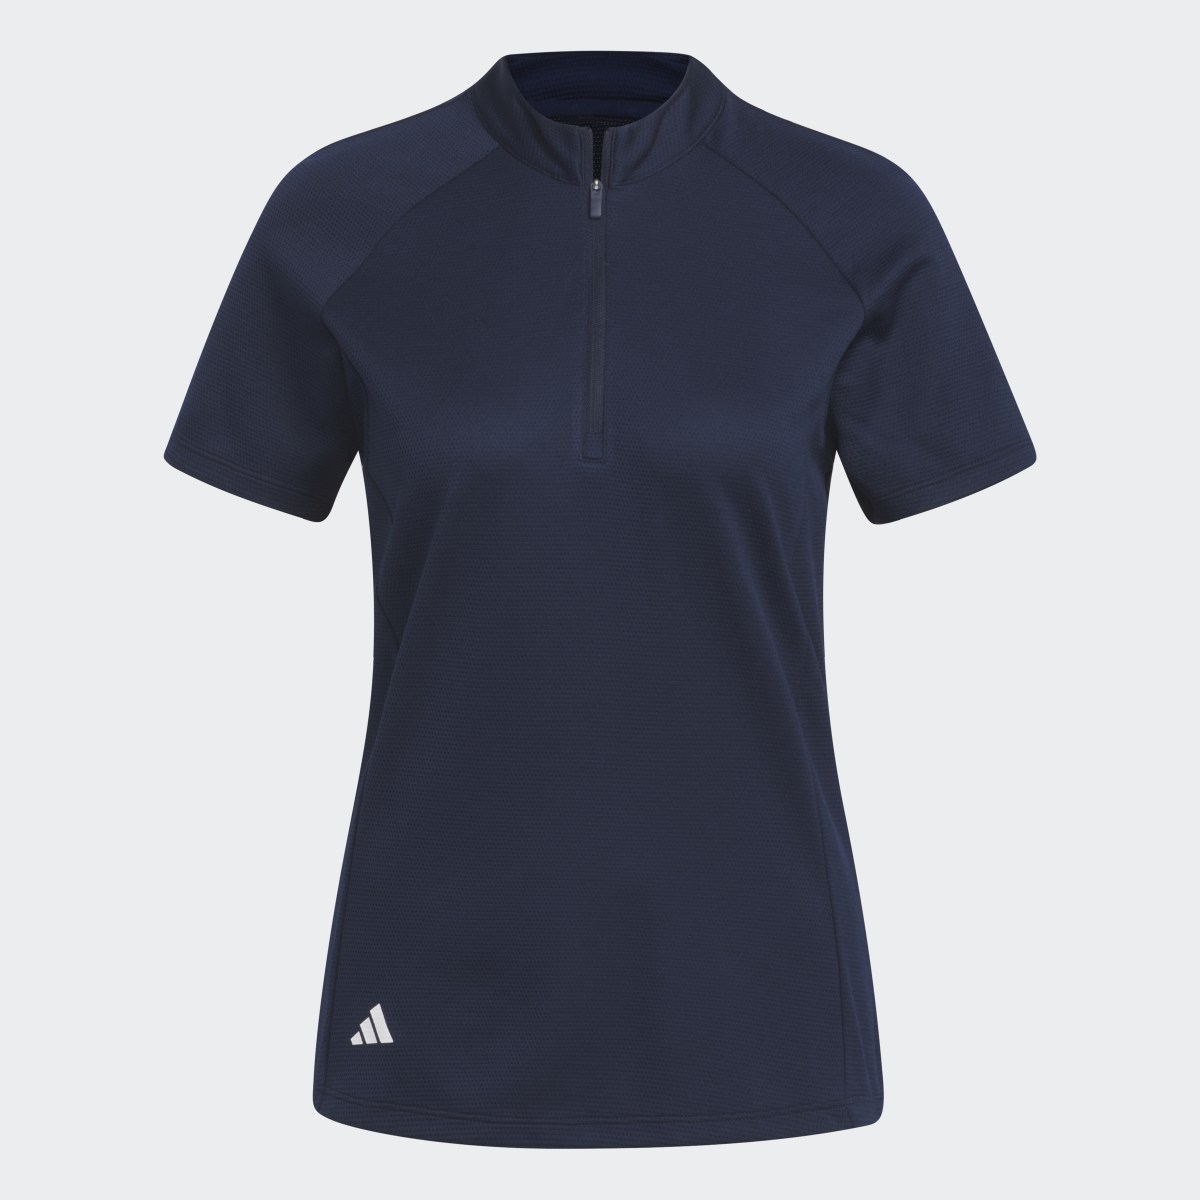 Adidas Textured Golf Polo Shirt. 5